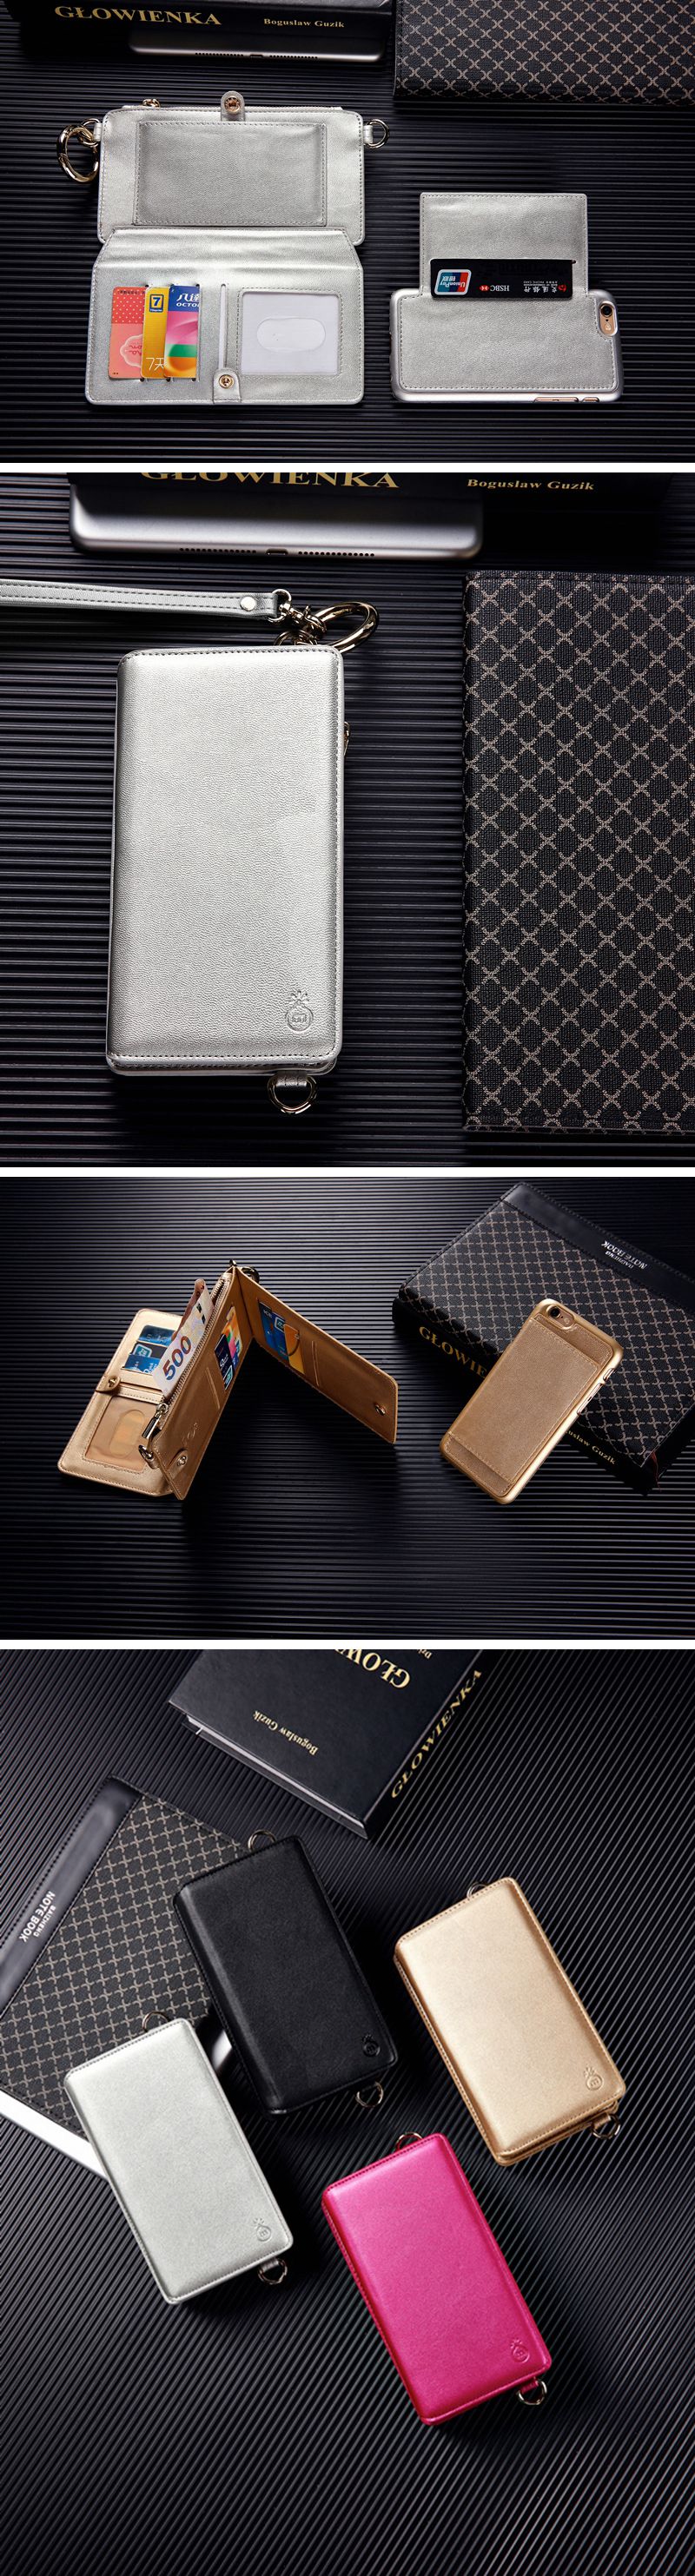 Removable-PU-Leather-Clutch-Wallet-Holder-Filp-Card-Case-Shoulder-Bag-Women-Purse-For-iPhone-6-6S-1088070-5